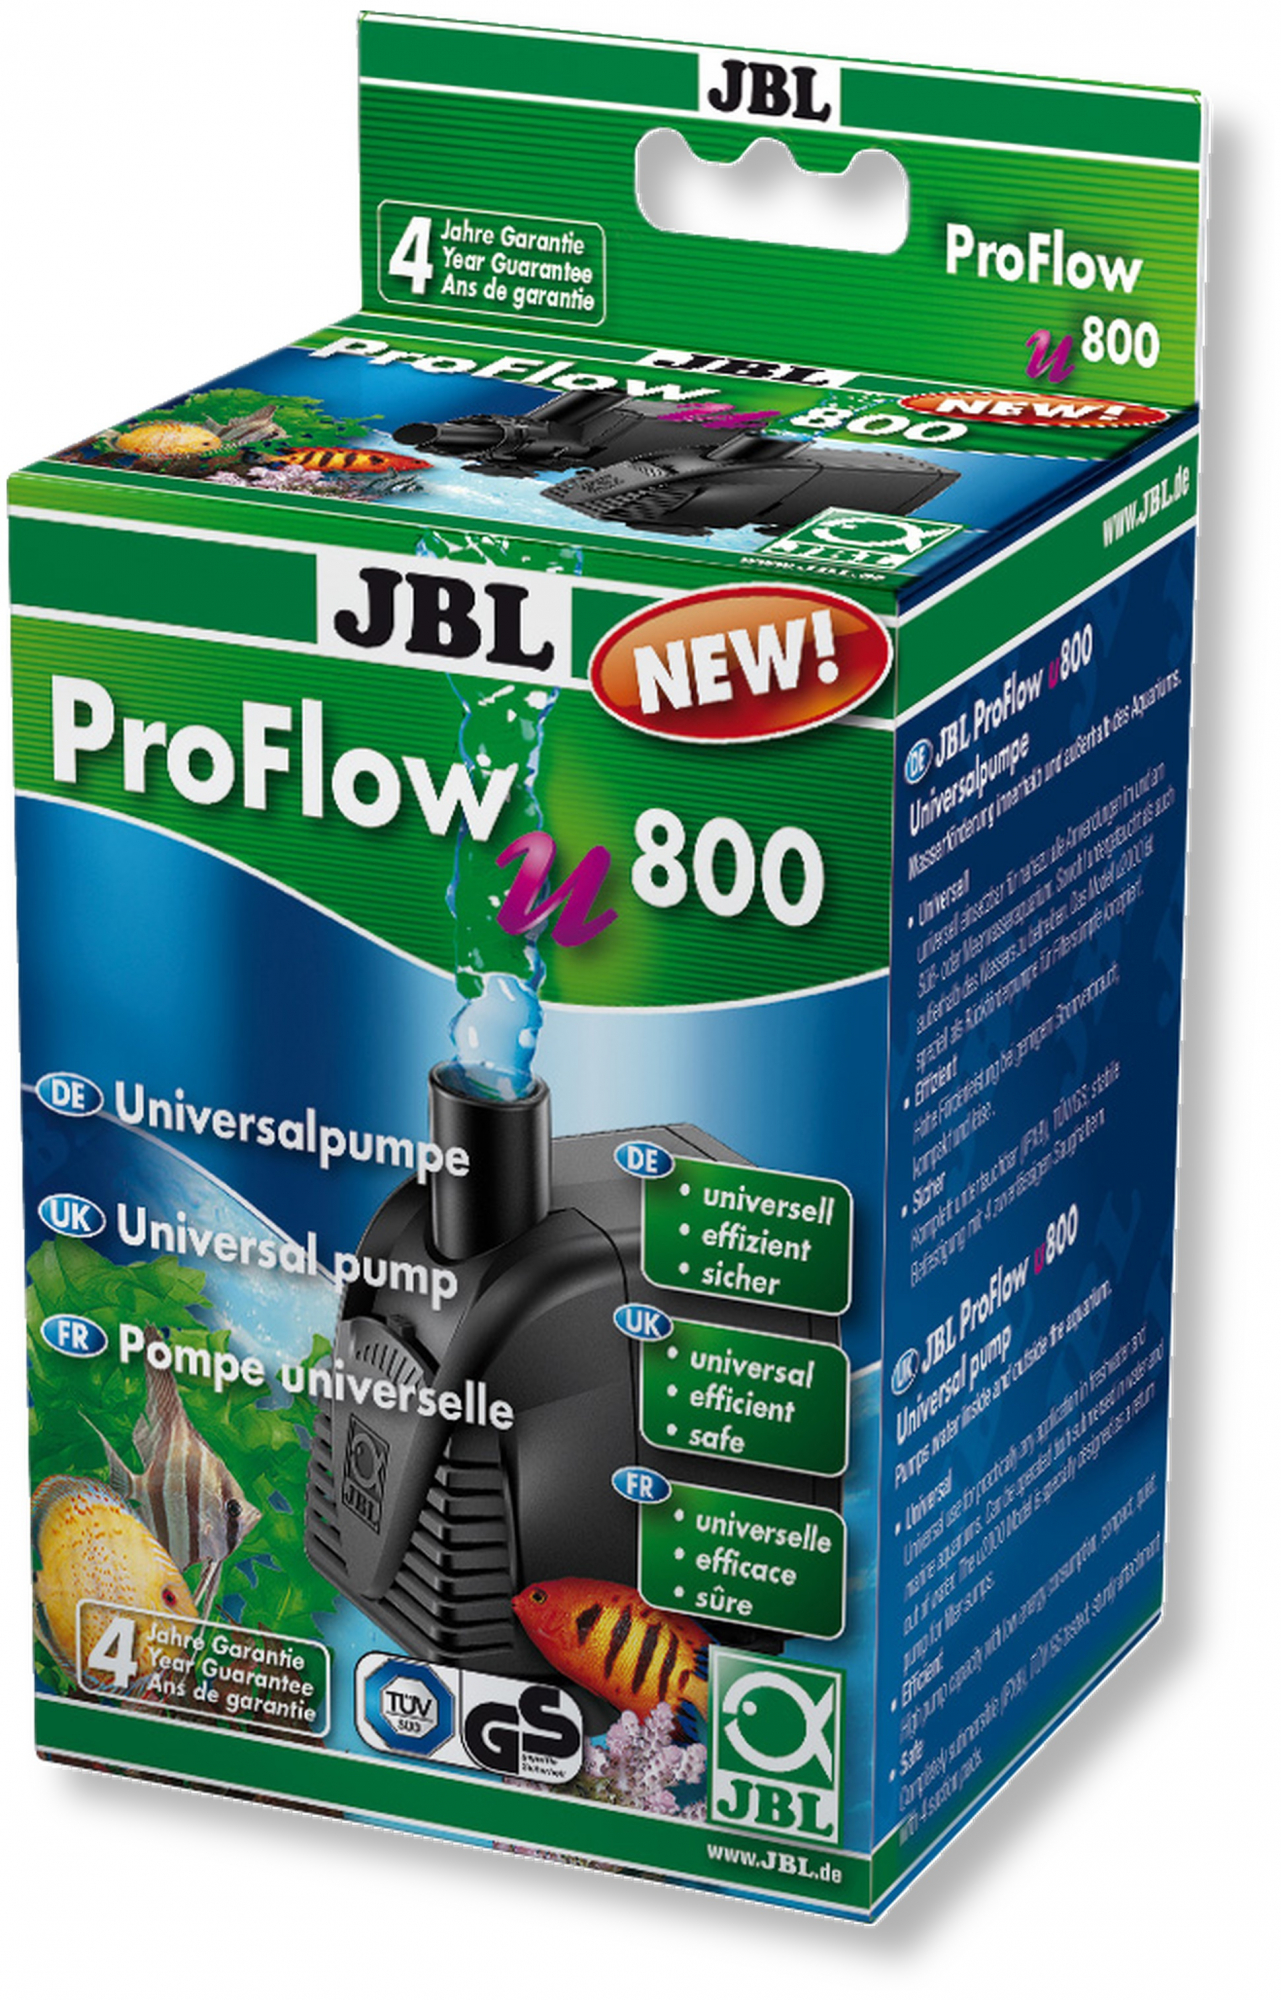 JBL Proflow, Universalpumpe - mehrere Modelle verfügbar